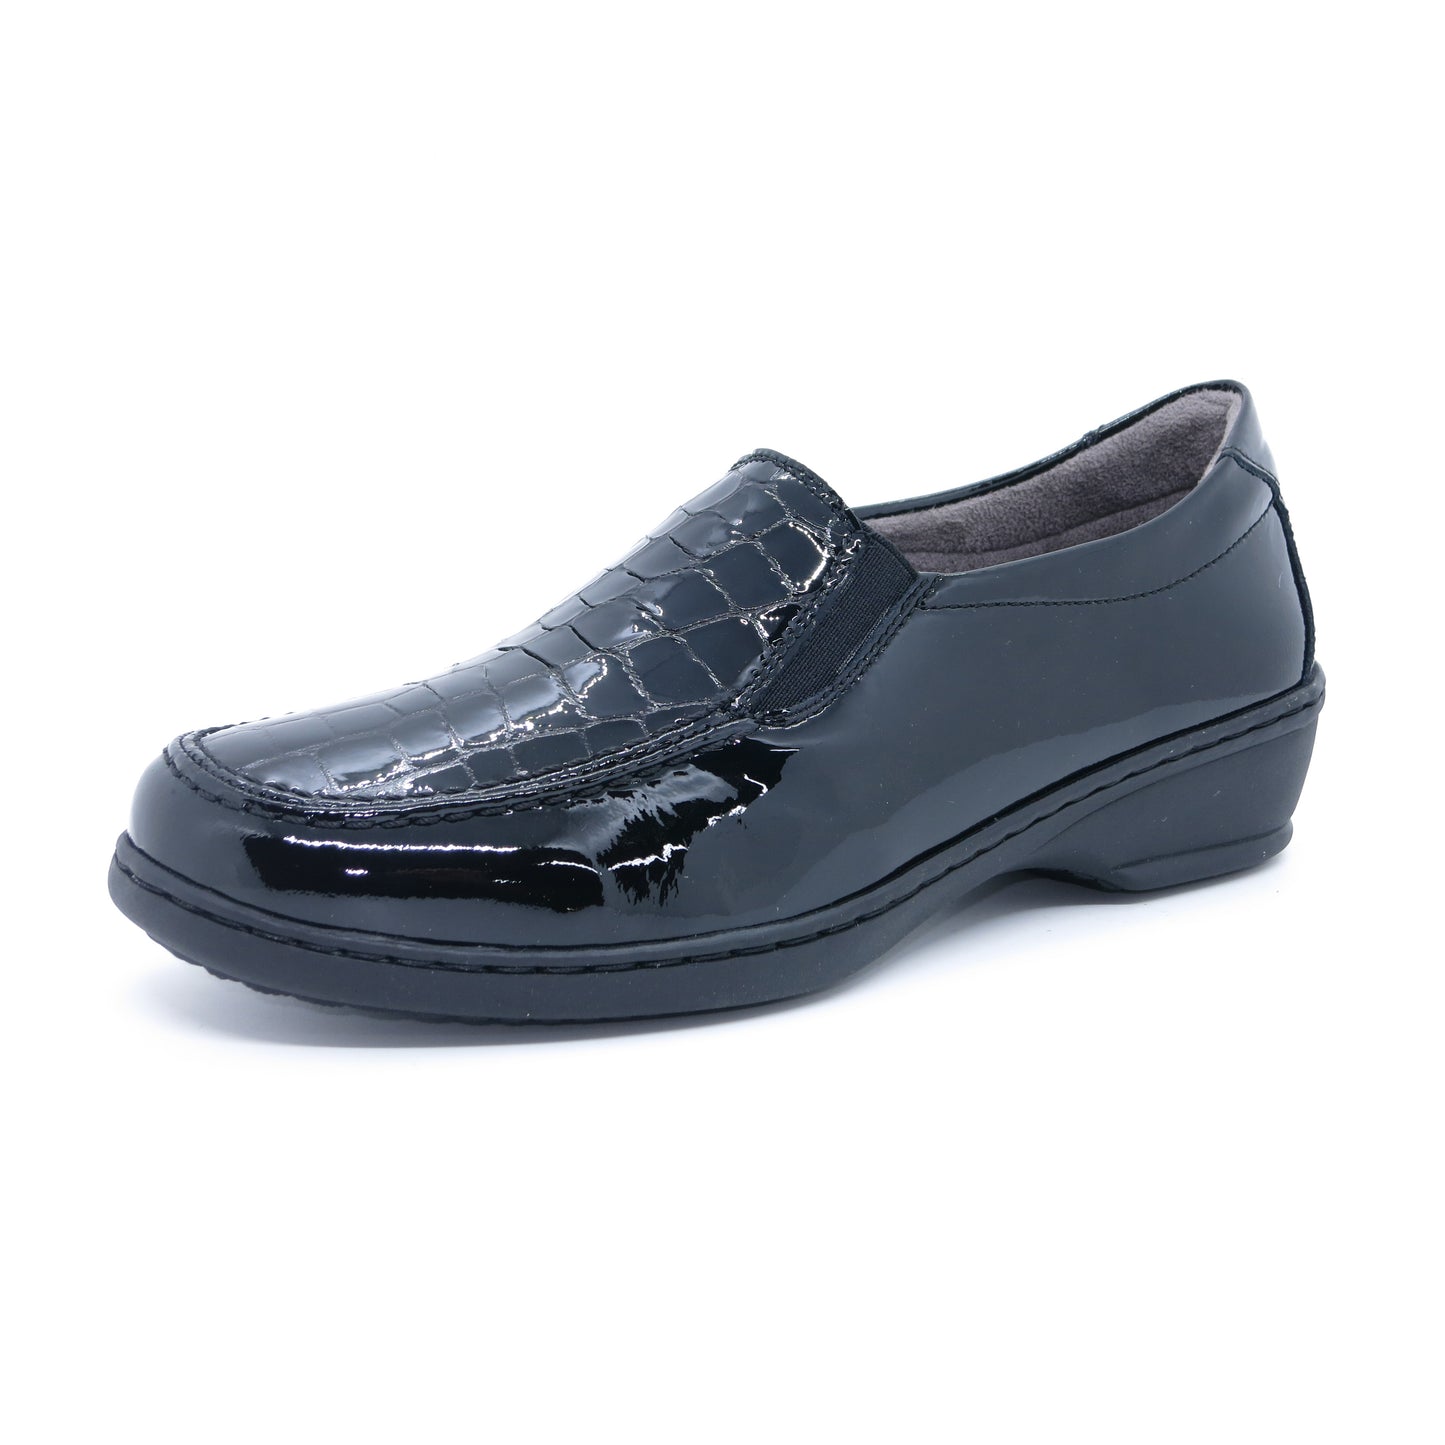 Notton 1461 Black Patent Slip On Shoes